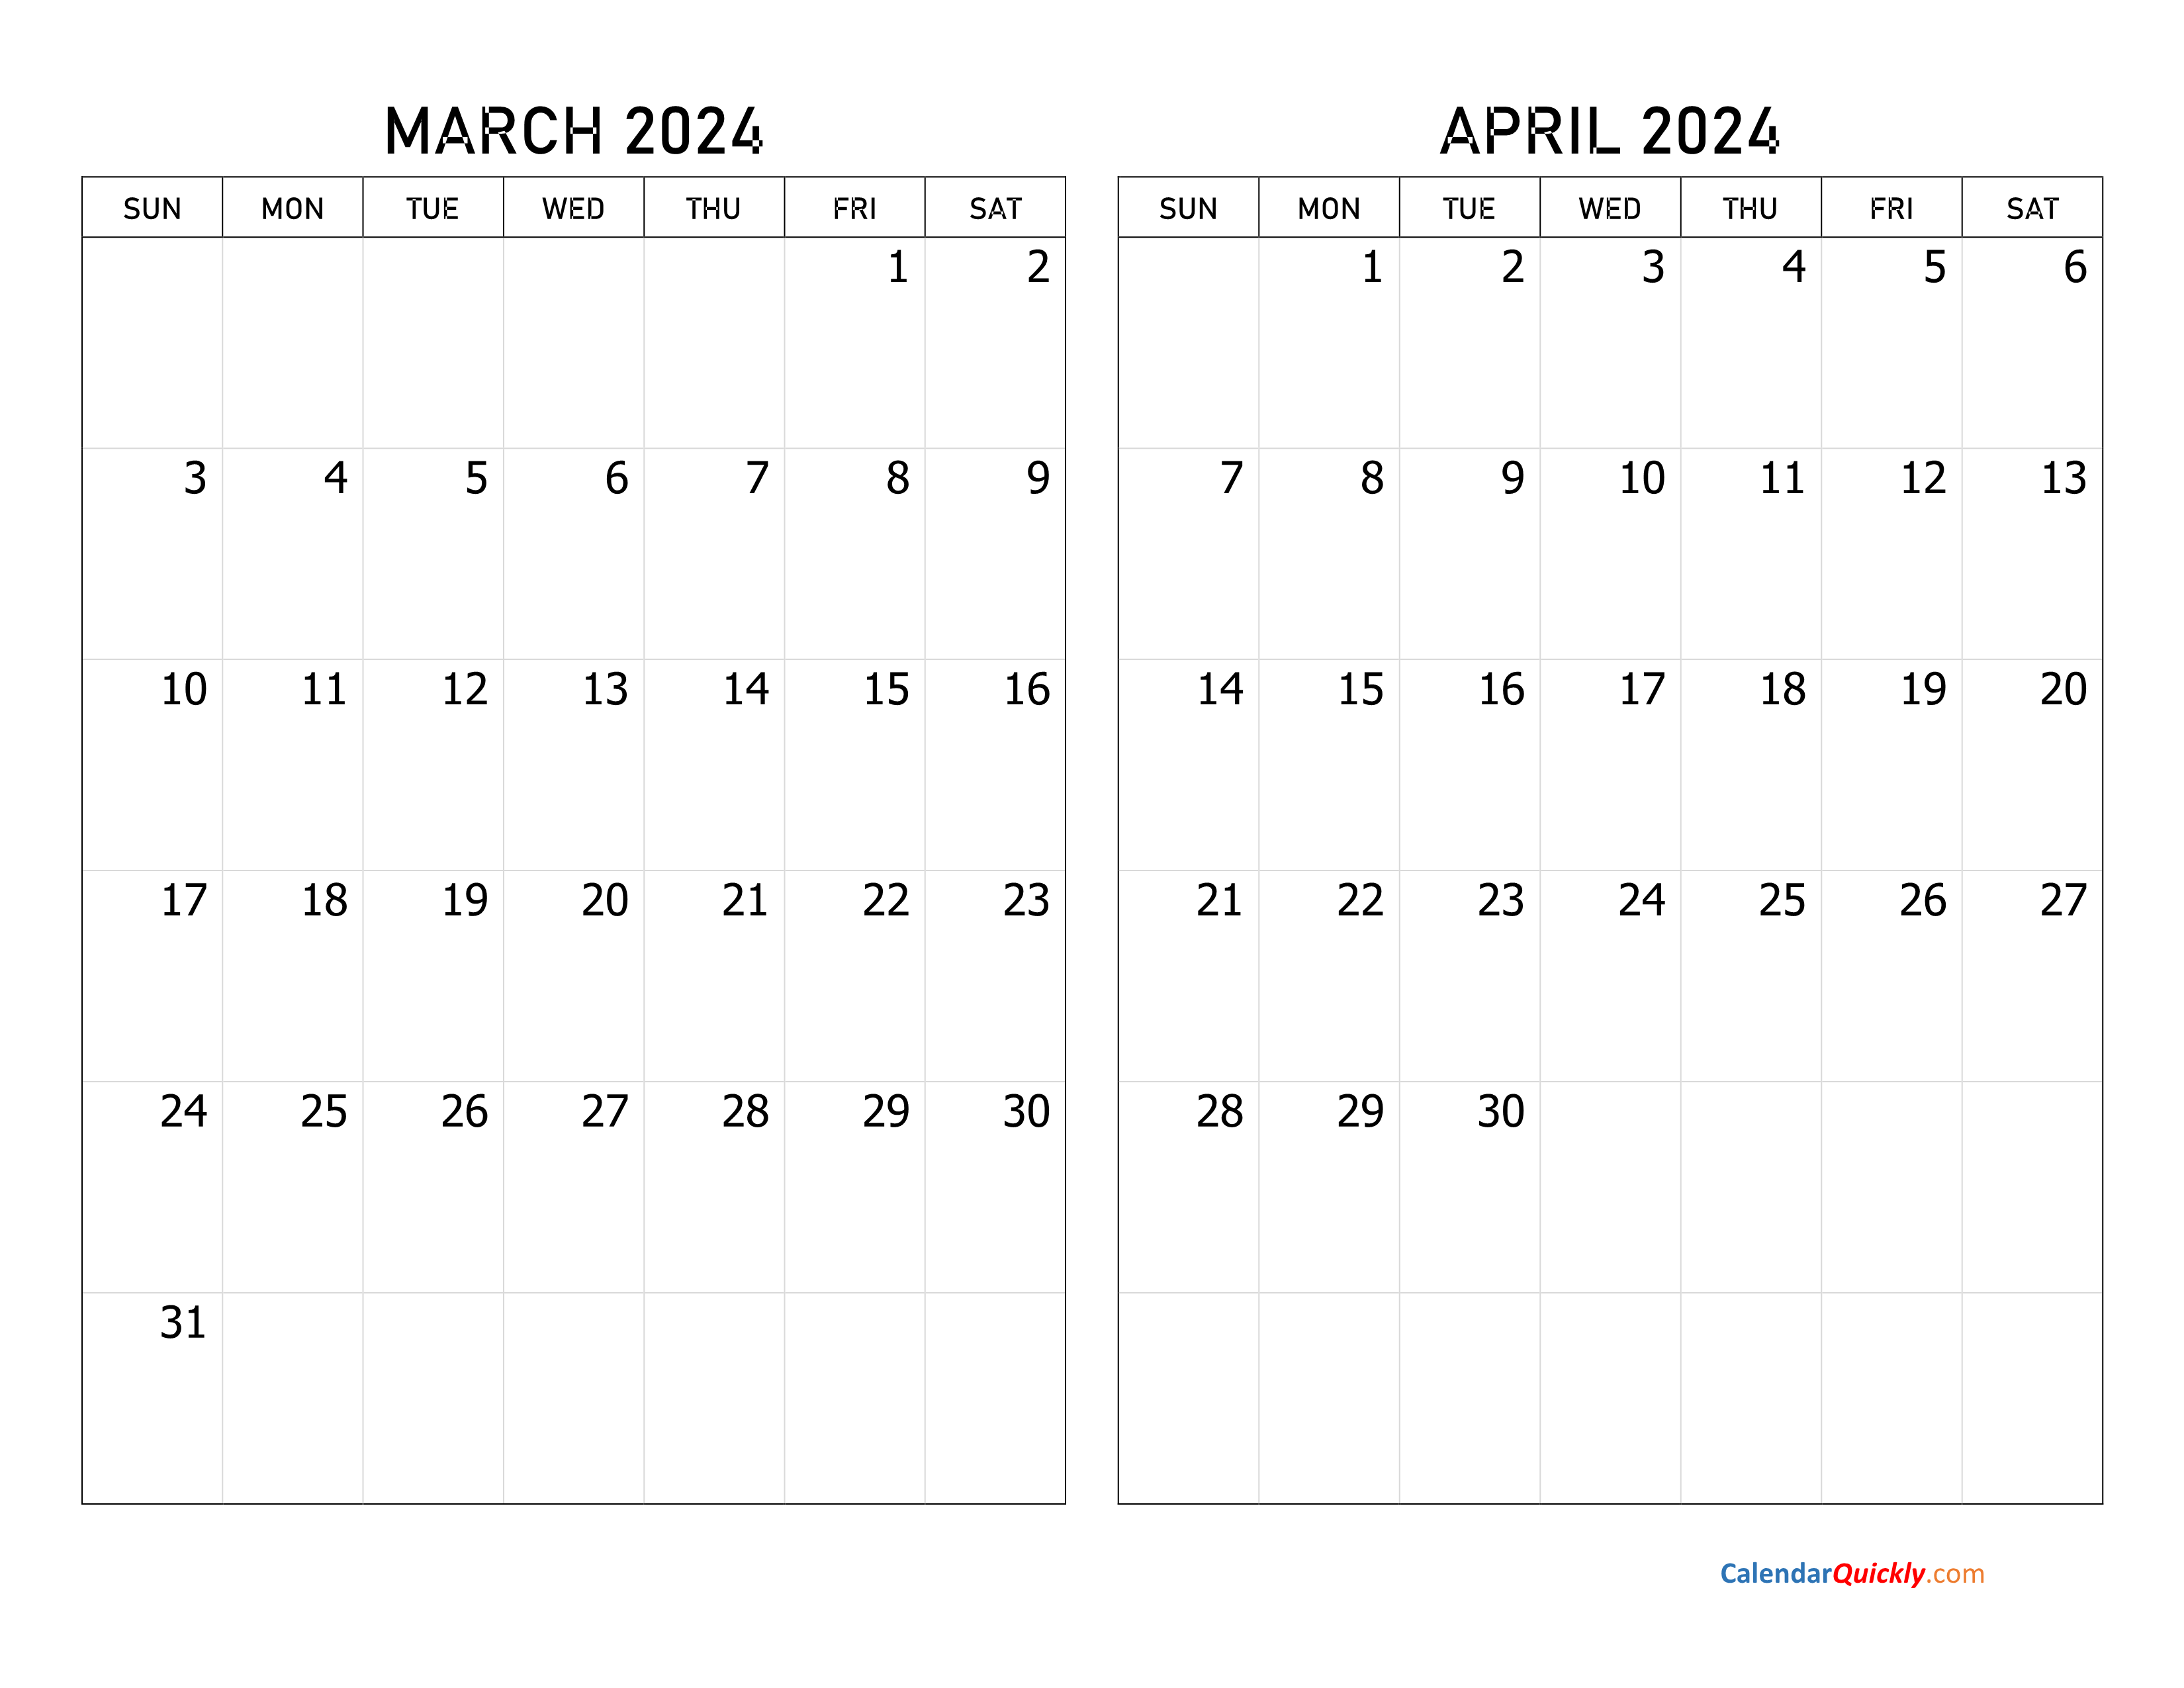 March And April 2024 Calendar | Calendar Quickly with regard to March/April 2024 Calendar